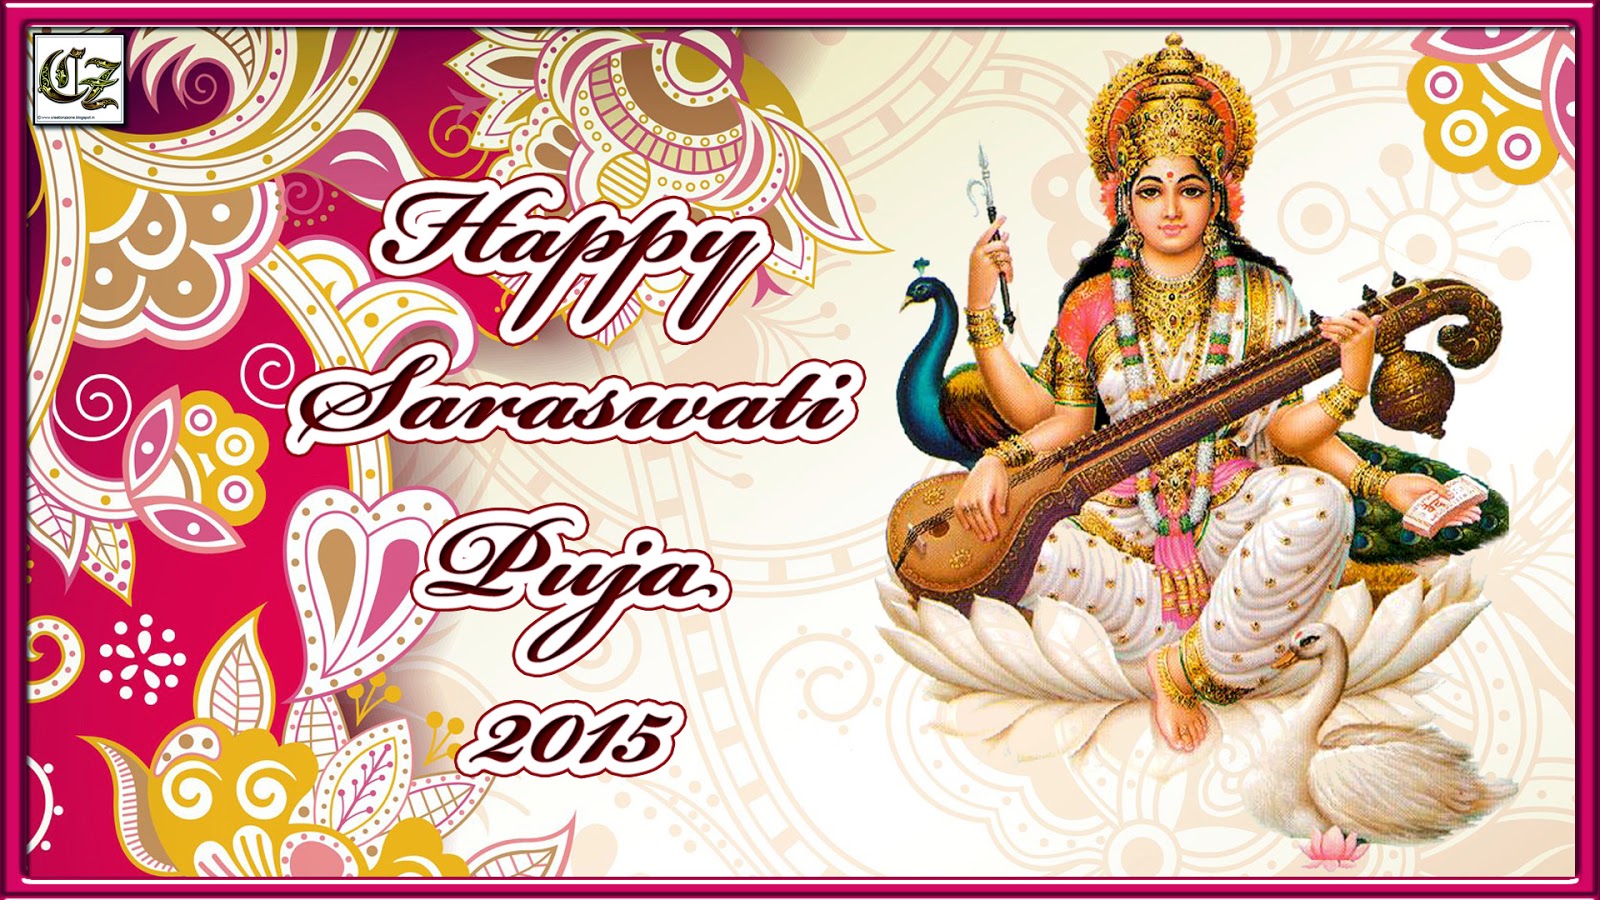 saraswati puja wallpaper,instrumento musical,instrumentos musicales indios,bansuri,instrumentos de cuerda pulsada